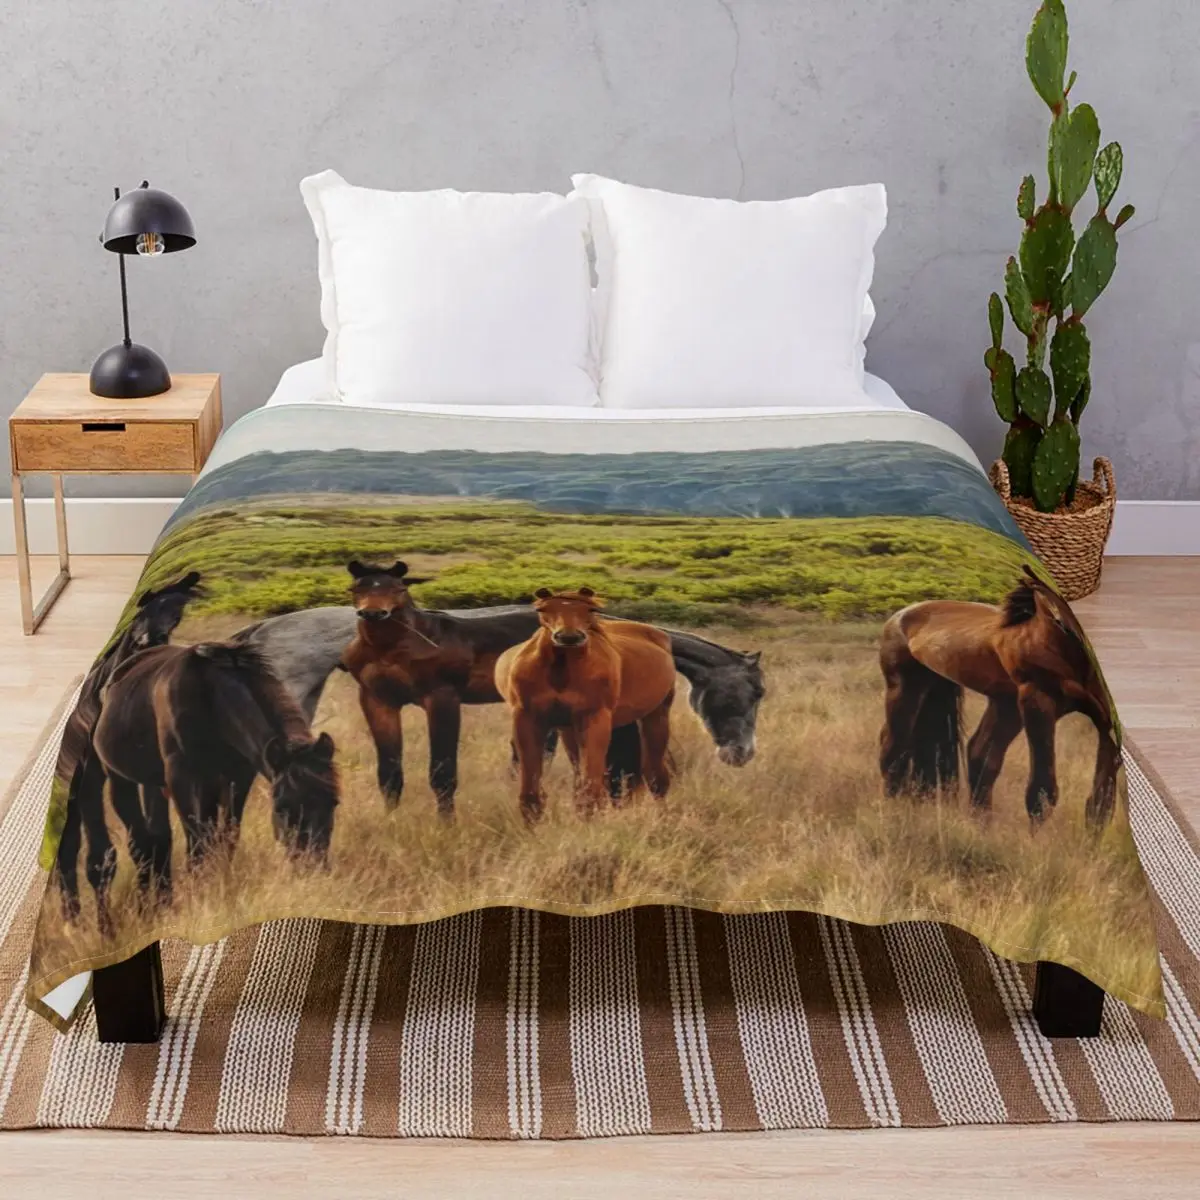 Horses In Kosciuszko Blanket Fleece Print Lightweight Thin Throw Blankets for Bedding Home Couch Camp Cinema